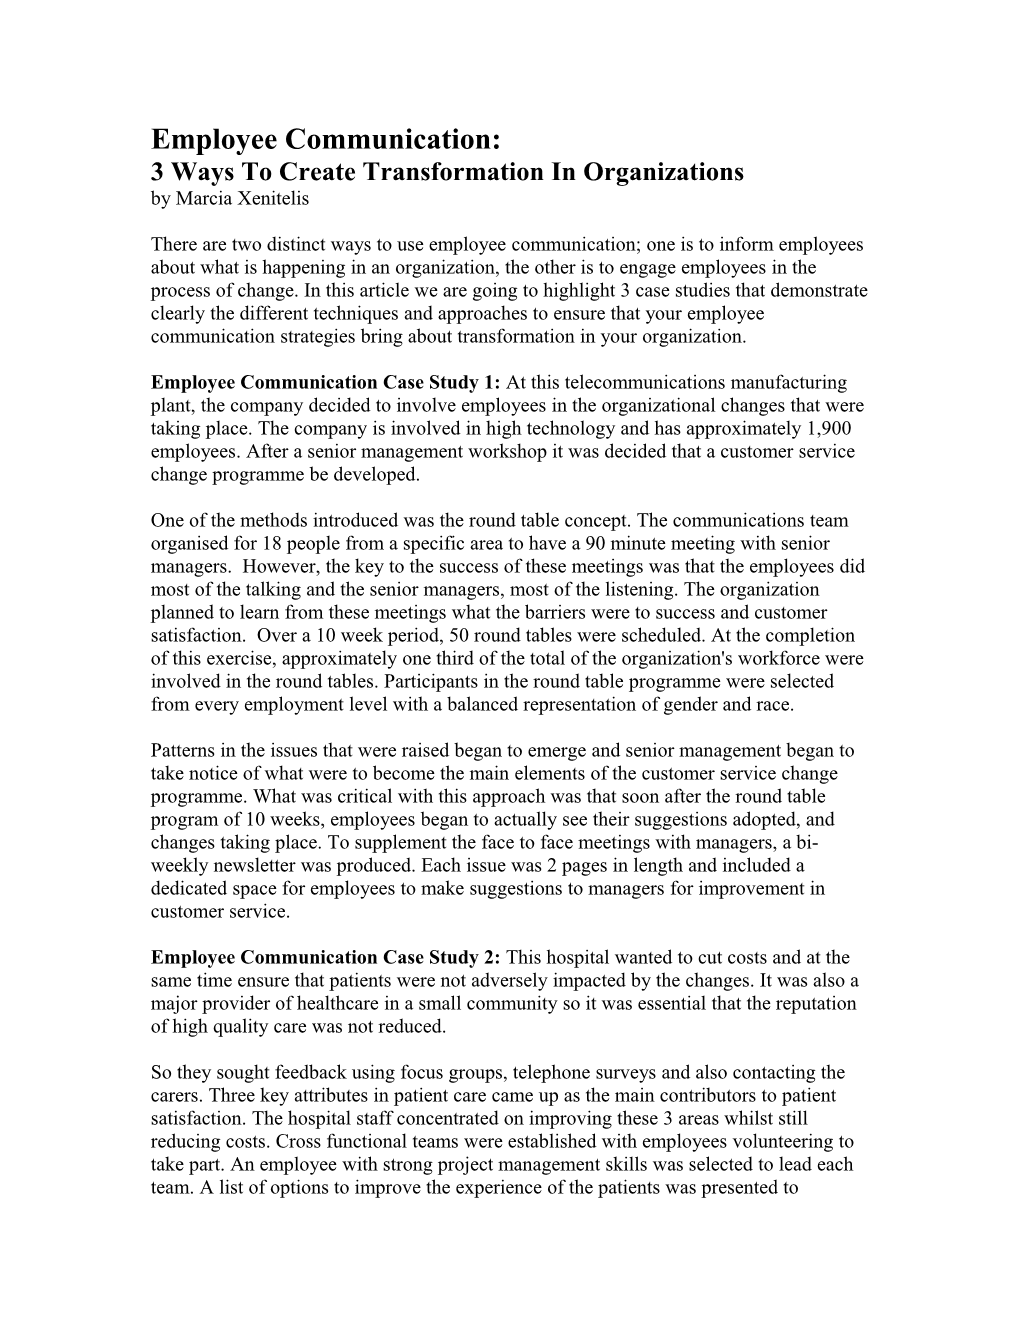 3 Ways to Create Transformation in Organizations